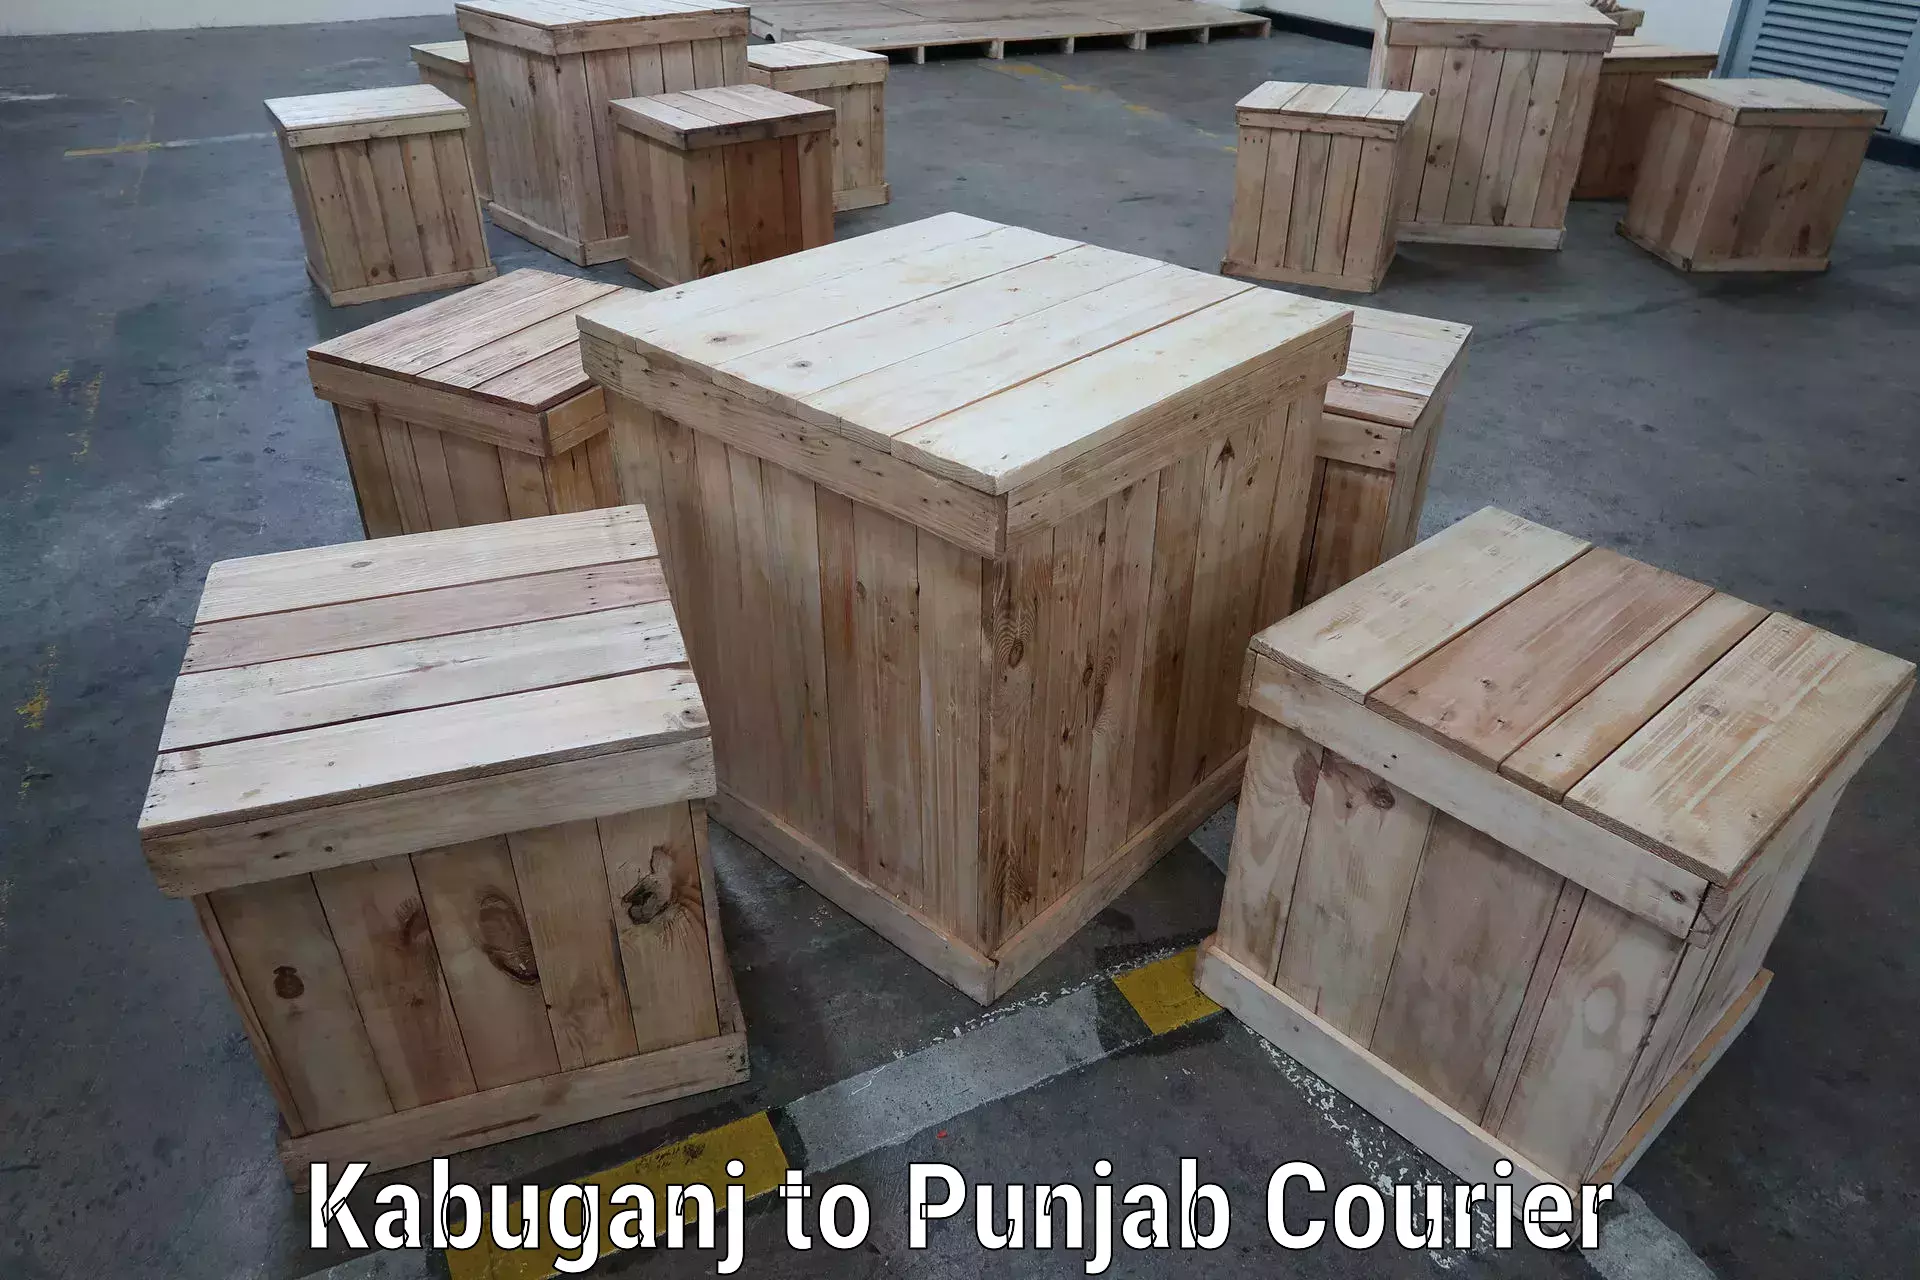 Courier service innovation Kabuganj to Punjab